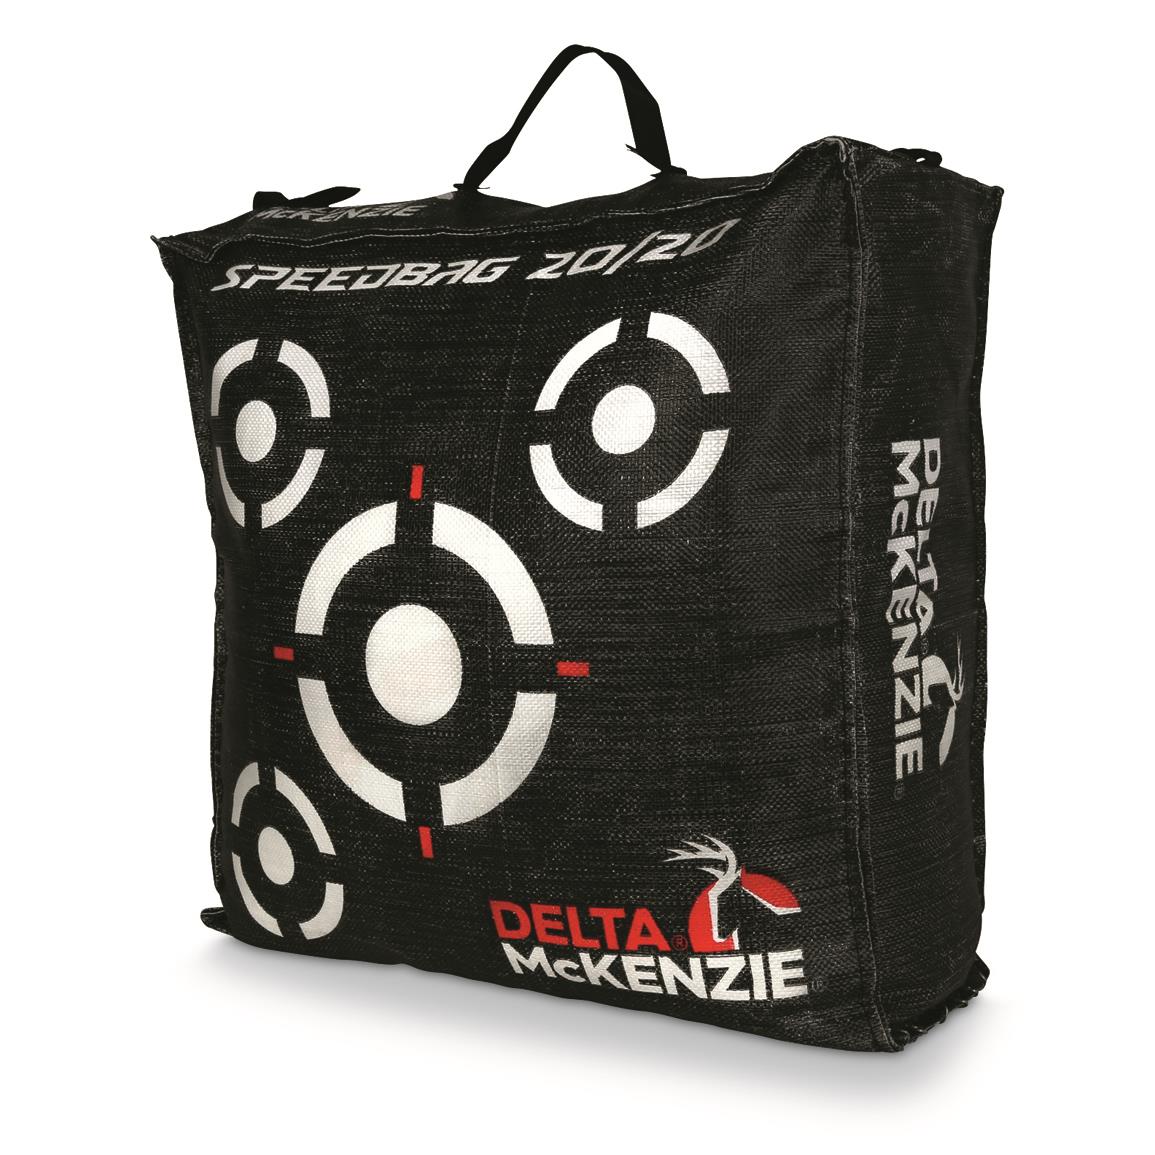 Delta McKenzie Speed Bag 20/20 Archery Target - 706806, Archery Targets at Sportsman&#39;s Guide